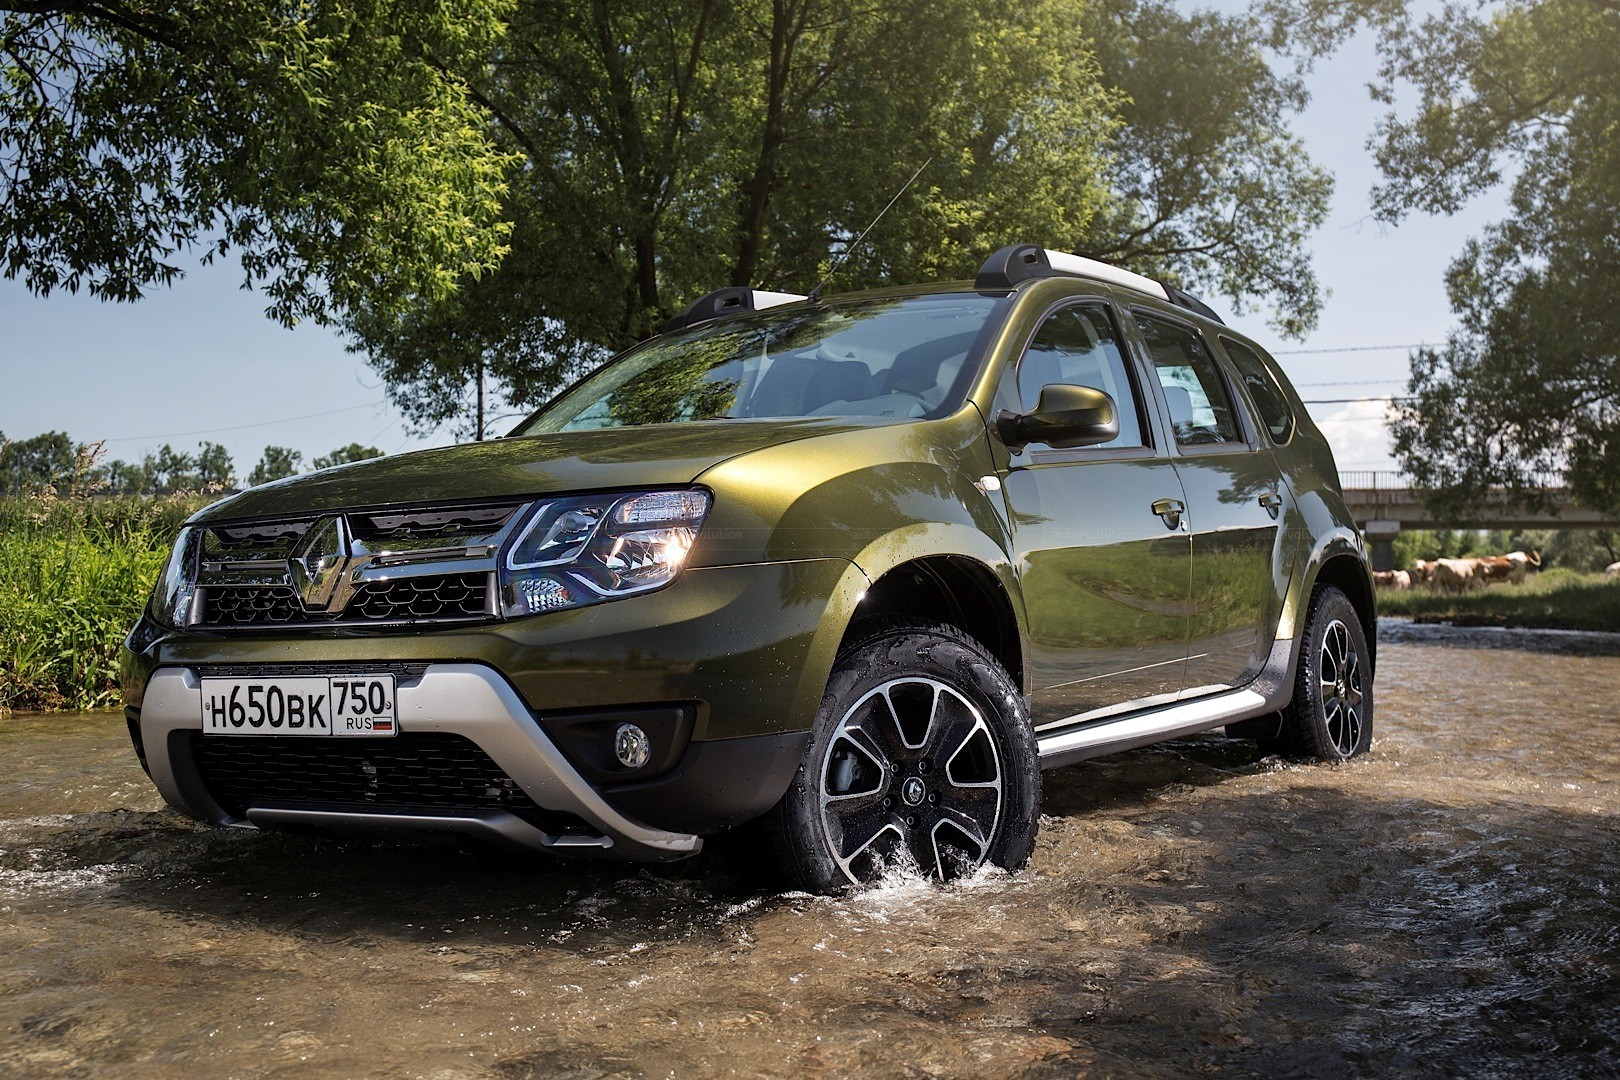 2016-Renault-Duster-Facelift